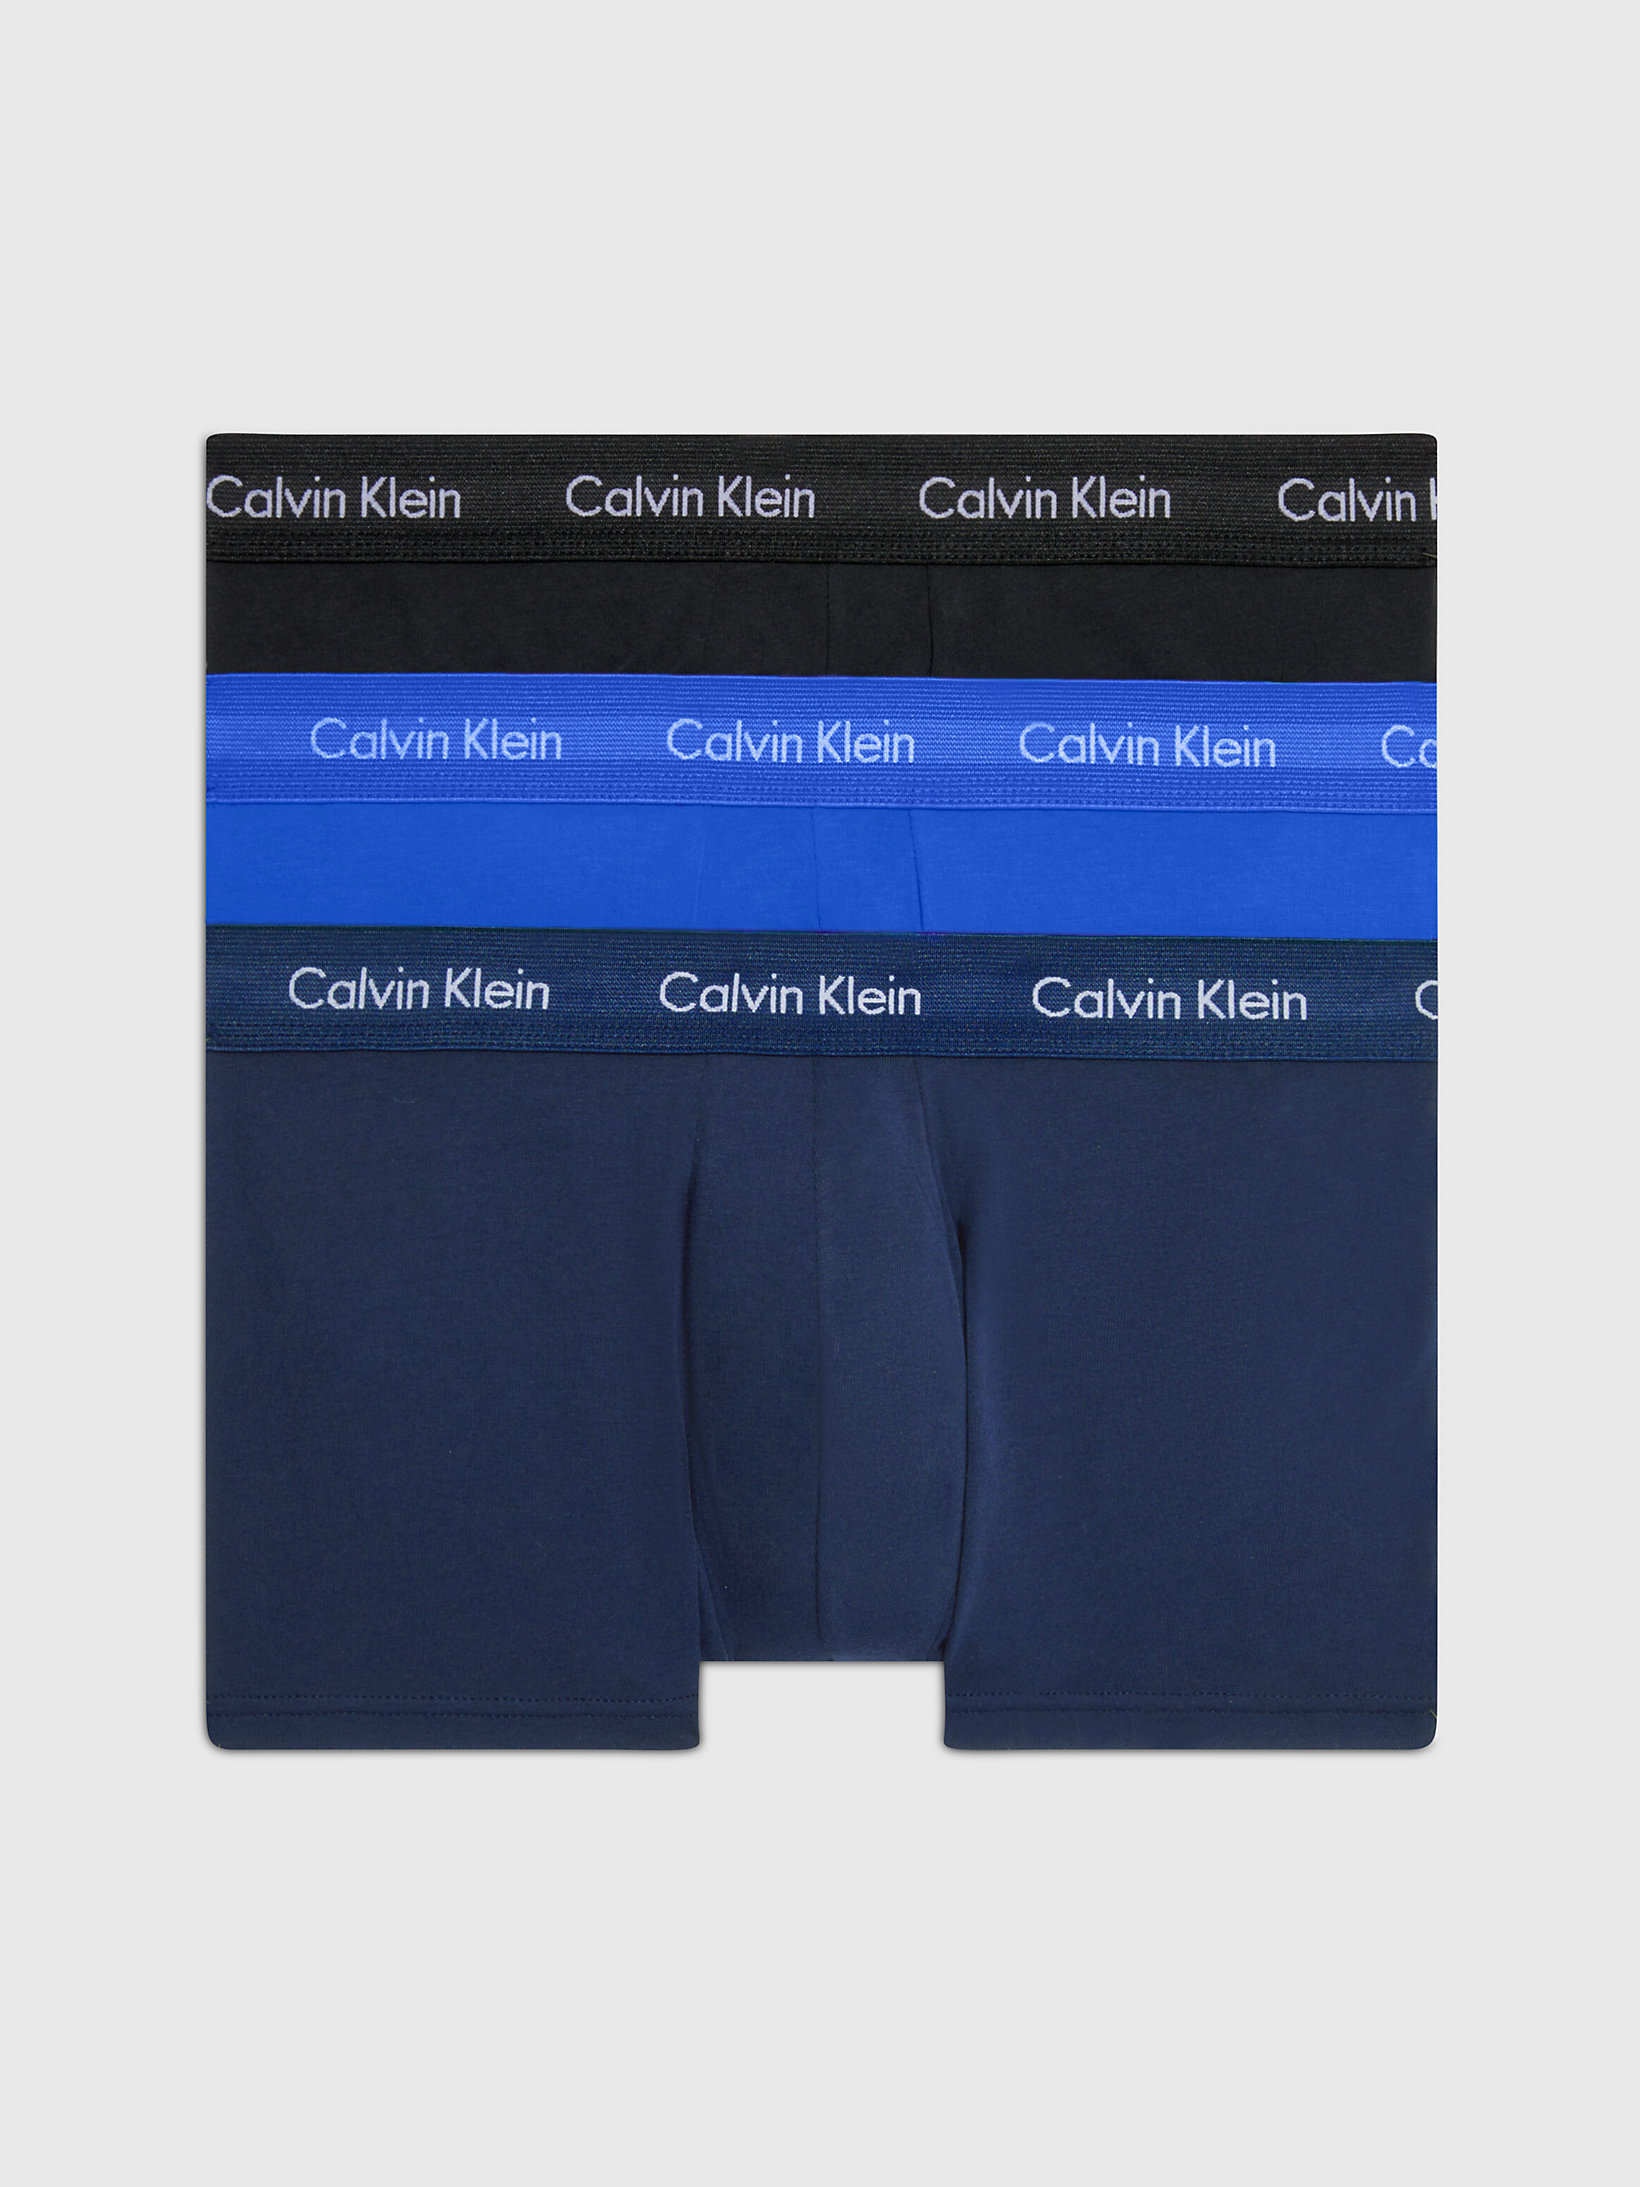 Mens Clothing Underwear Boxers Pride in Black for Men Calvin Klein Cotton Trunk 